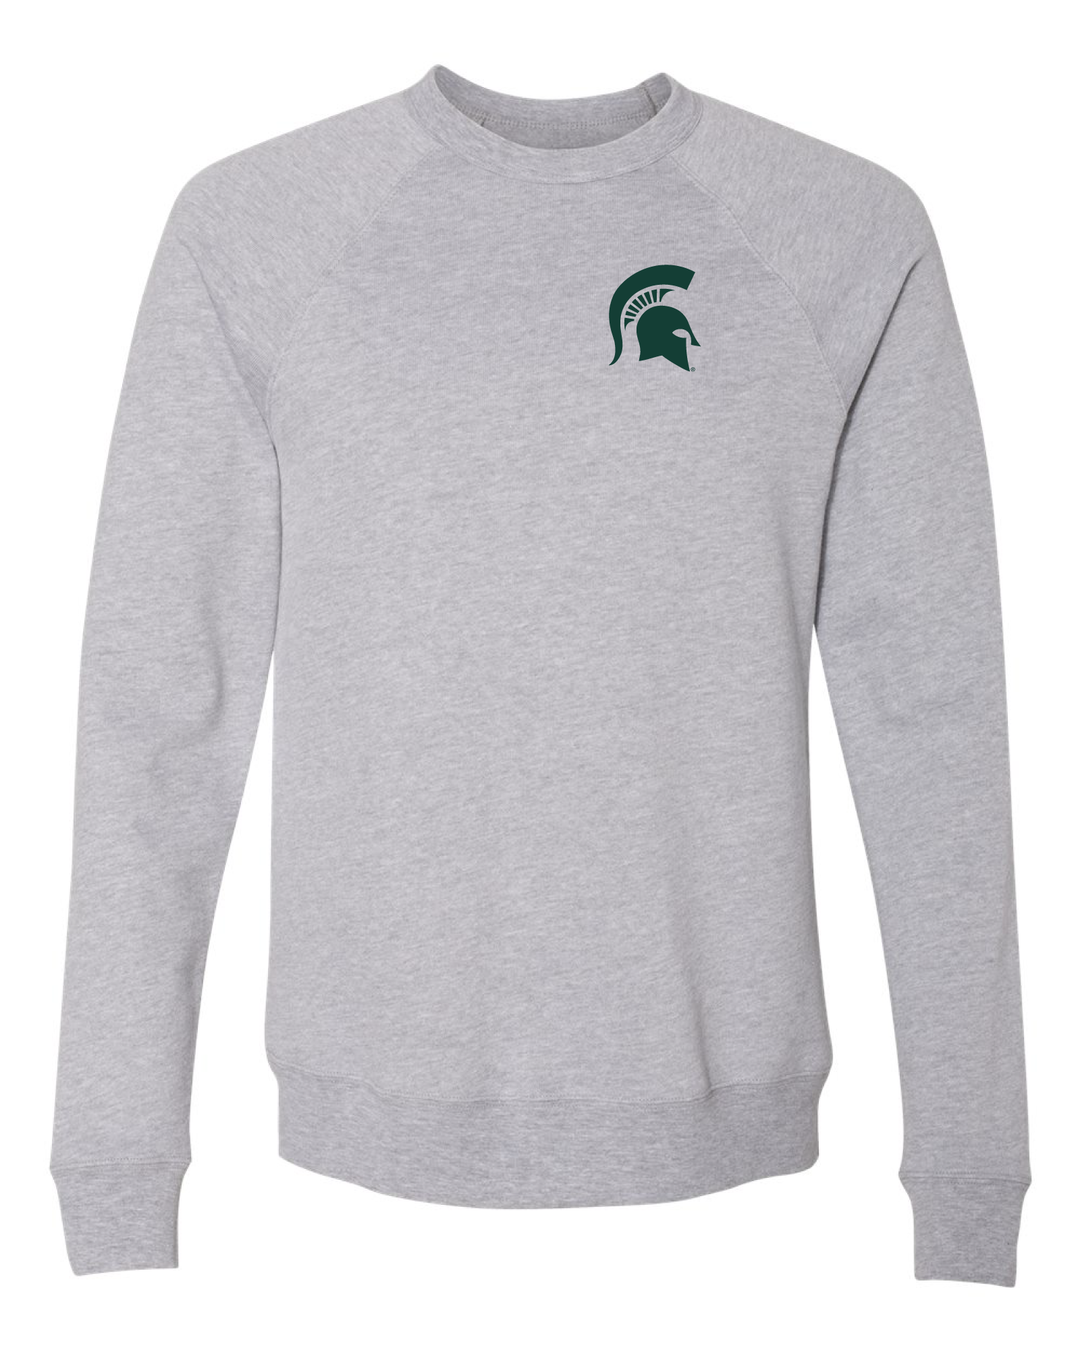 Michigan State Crewneck Sweatshirt from Nudge Printing